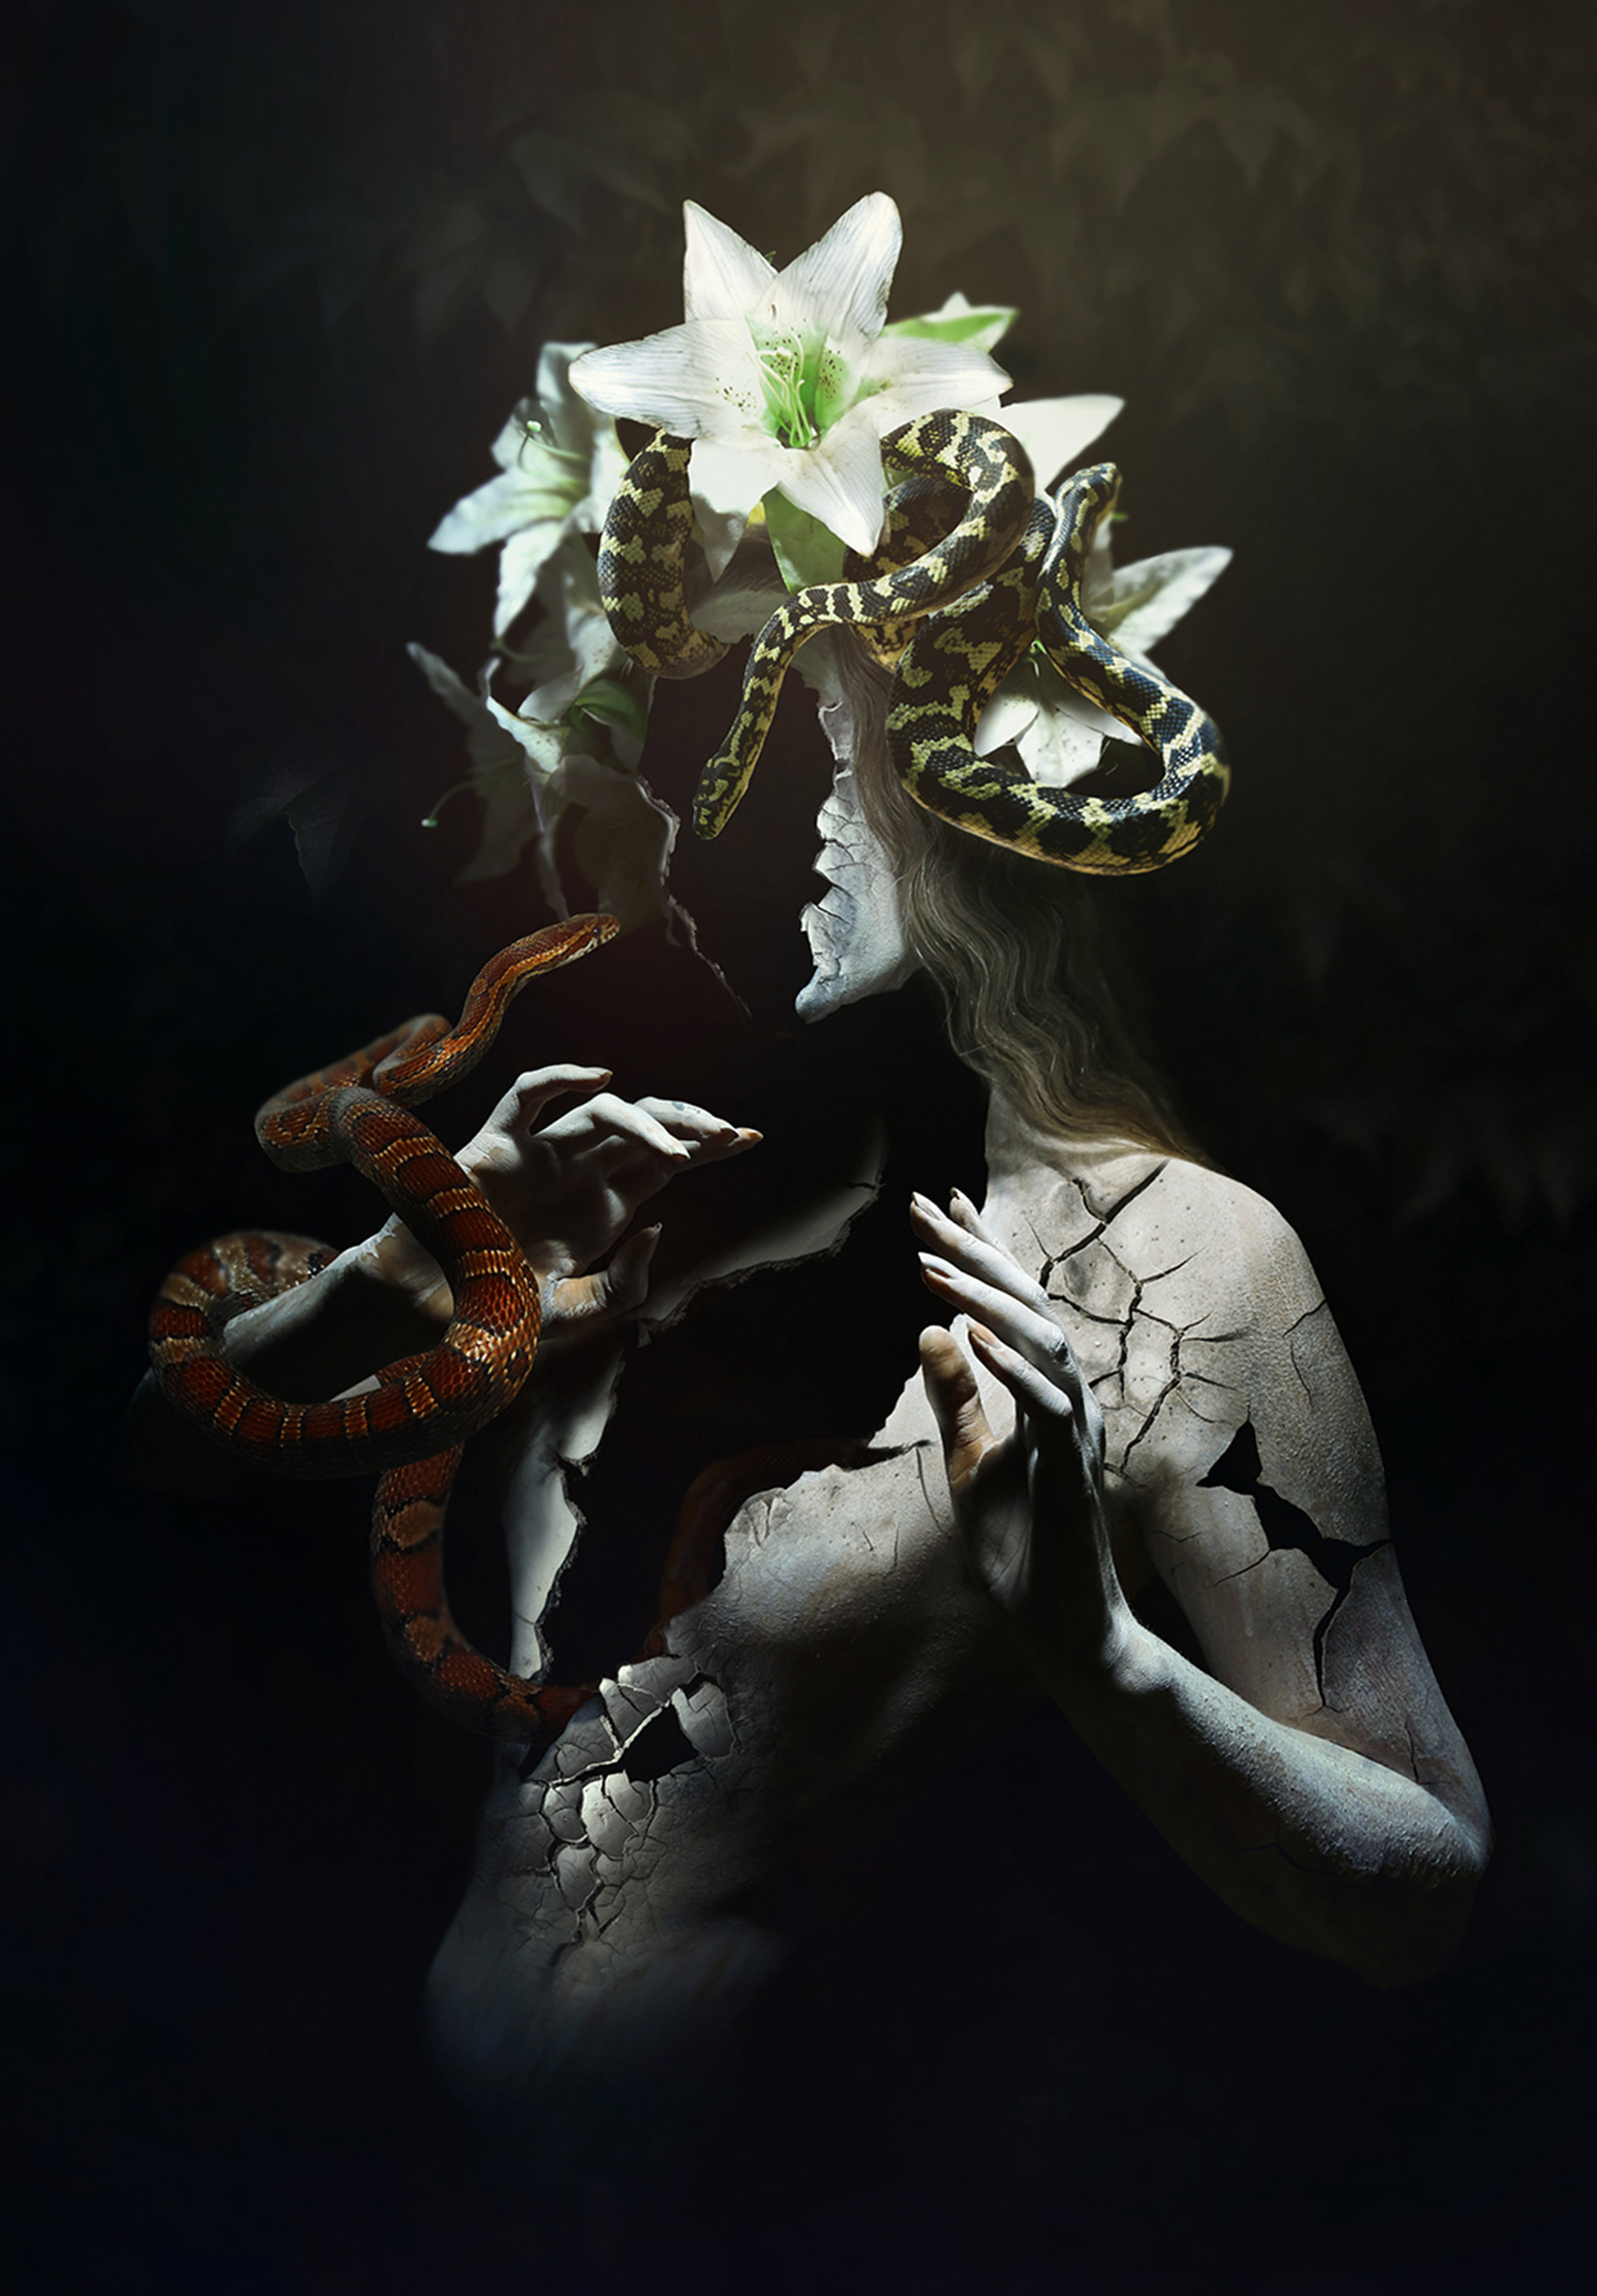 Diana Dihaze - flowers and snakes